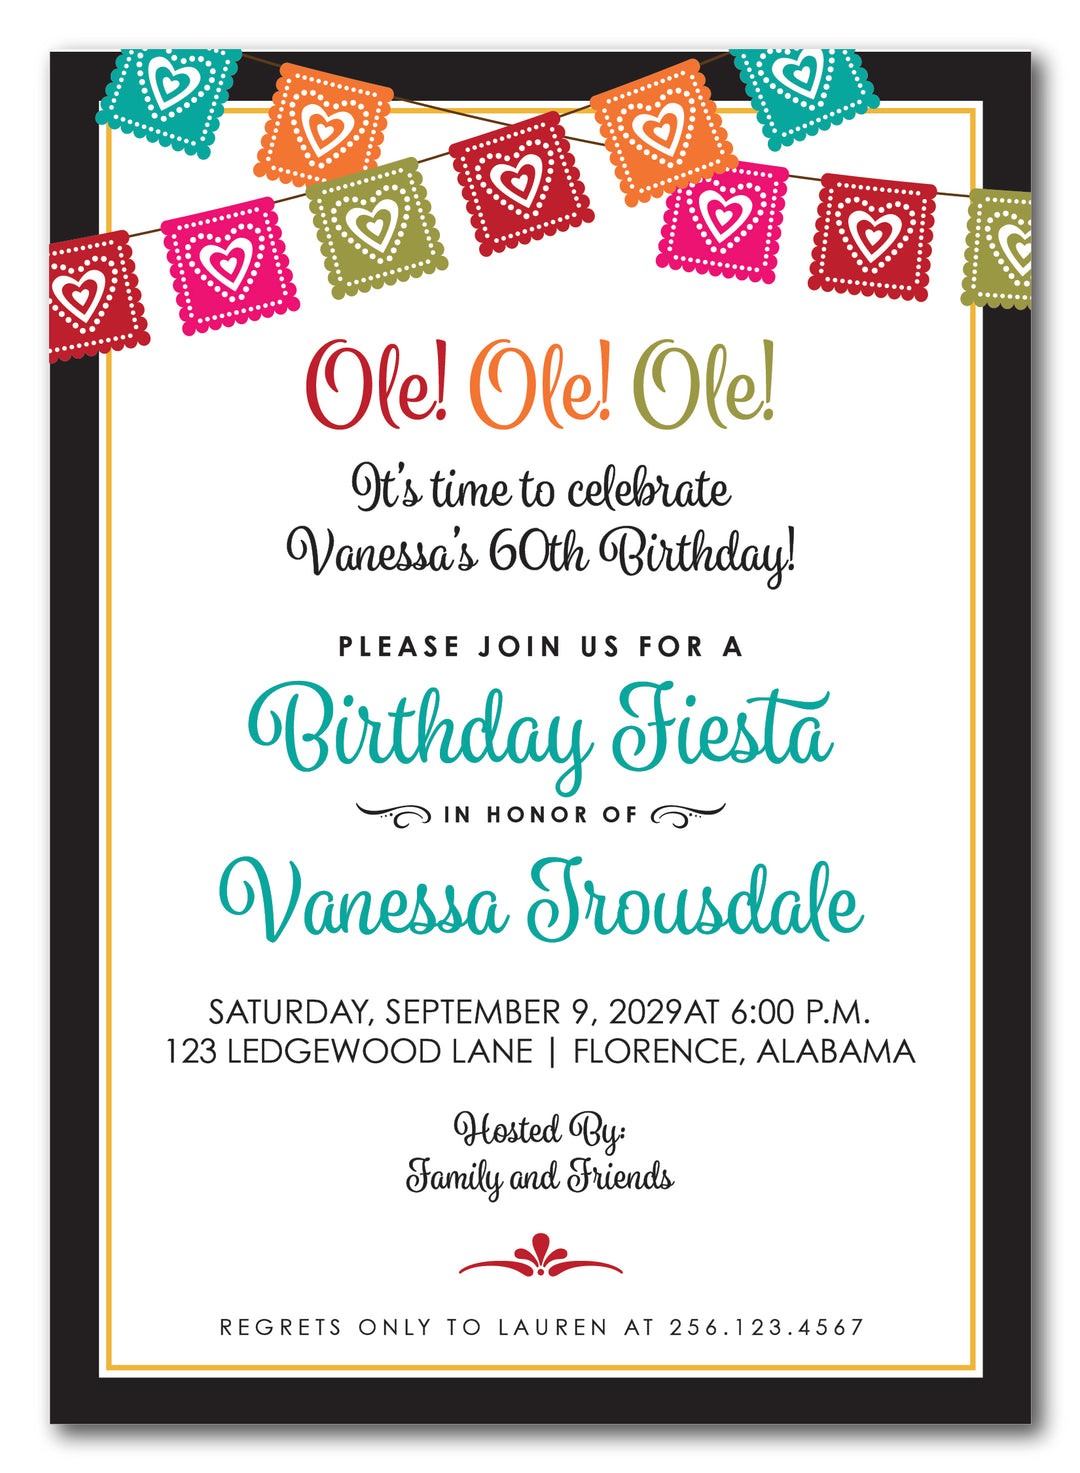 The Fiesta III Birthday Party Invitation